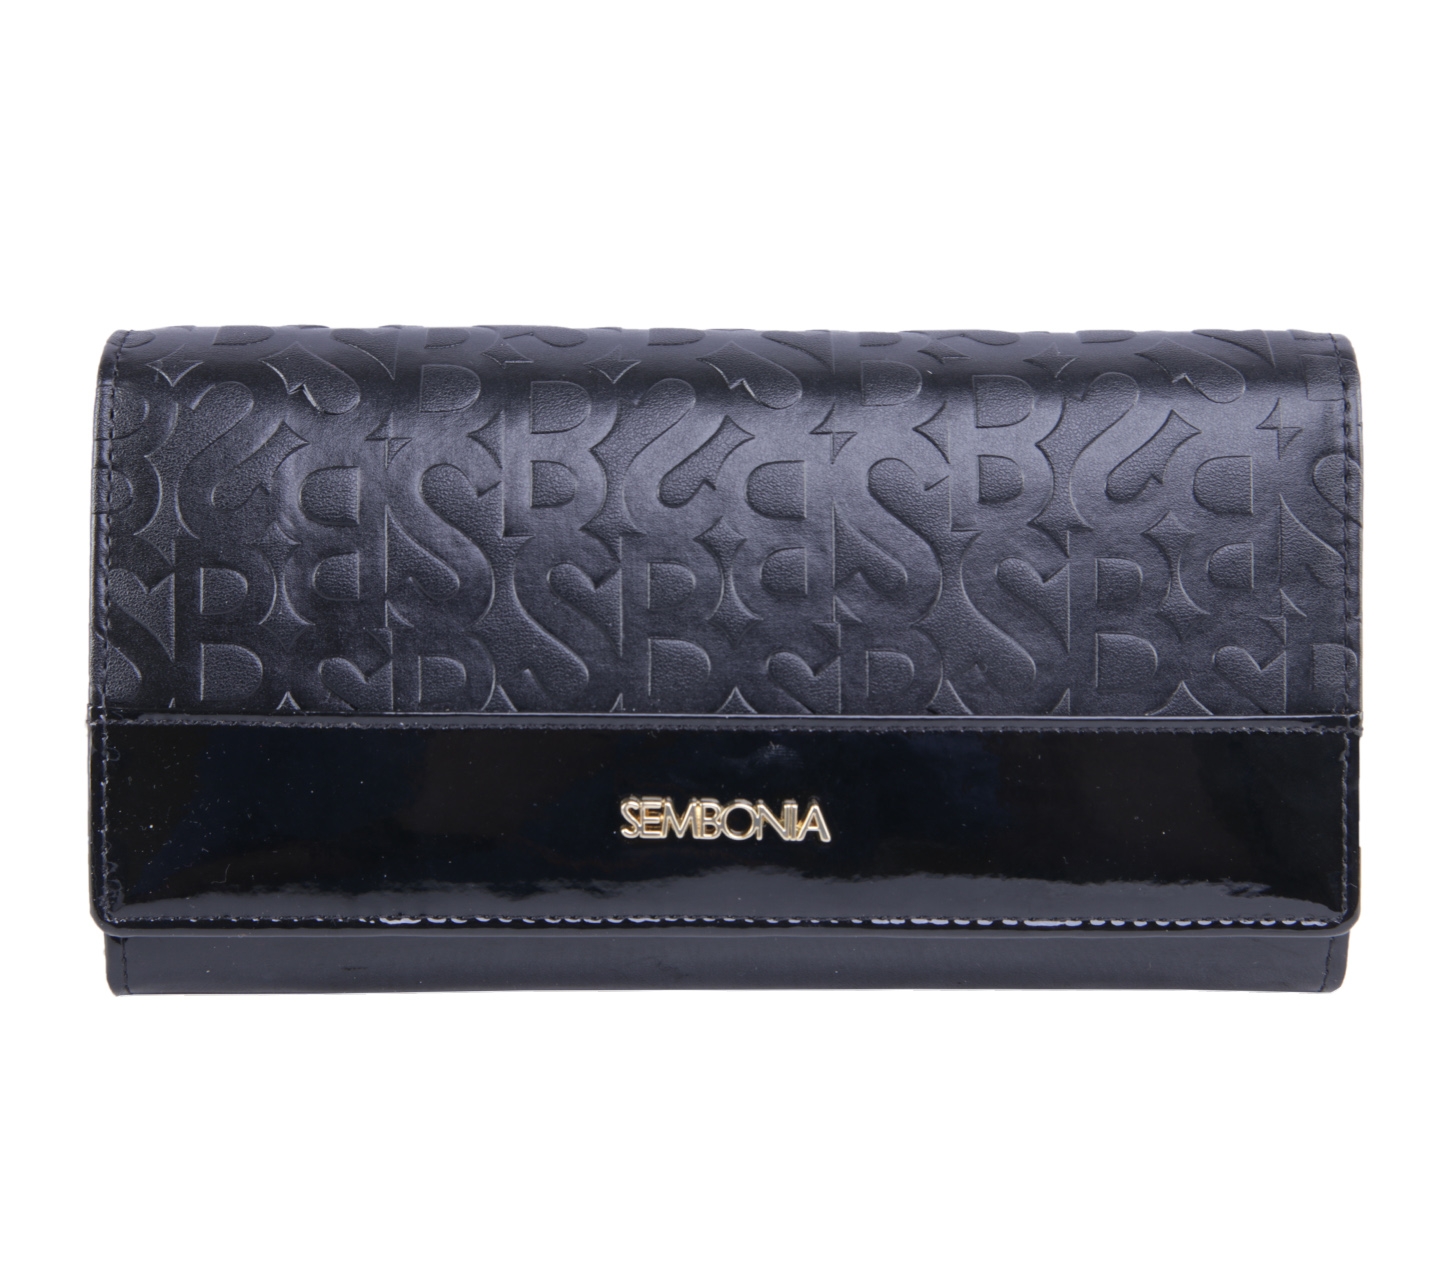 Sembonia Black Wallet